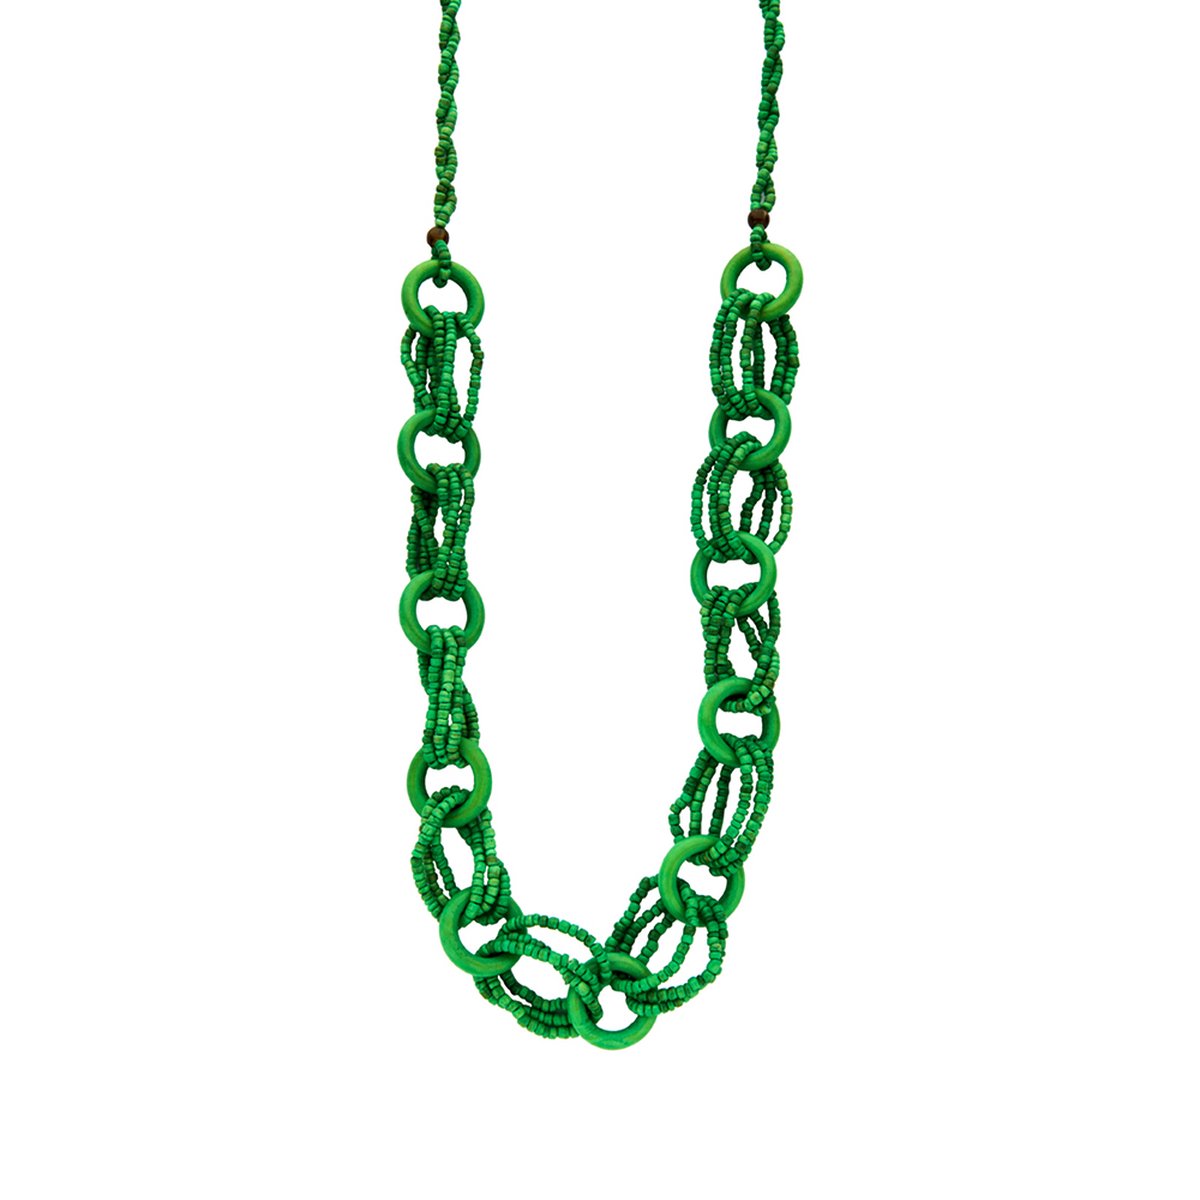 Les Cordes - Halsketting - Collier - URANIUM - Kleur Groen - Hout - Sieraad Dames - Juwelen - Statement ketting